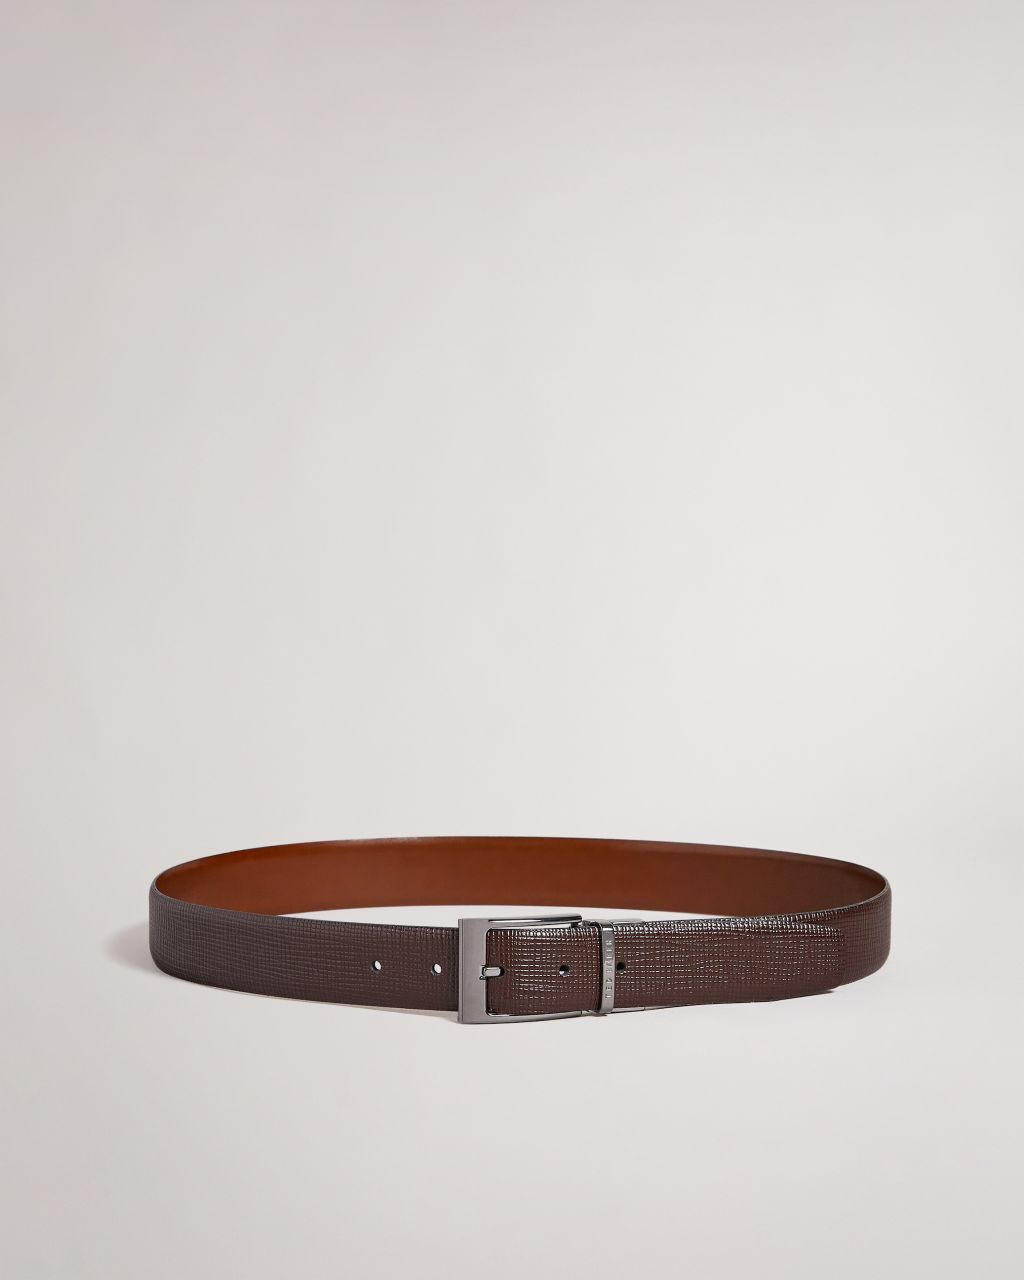 Ted Baker Men's Cross Hatch Leather Reversible Belt in Brown-Chocolate, Twin